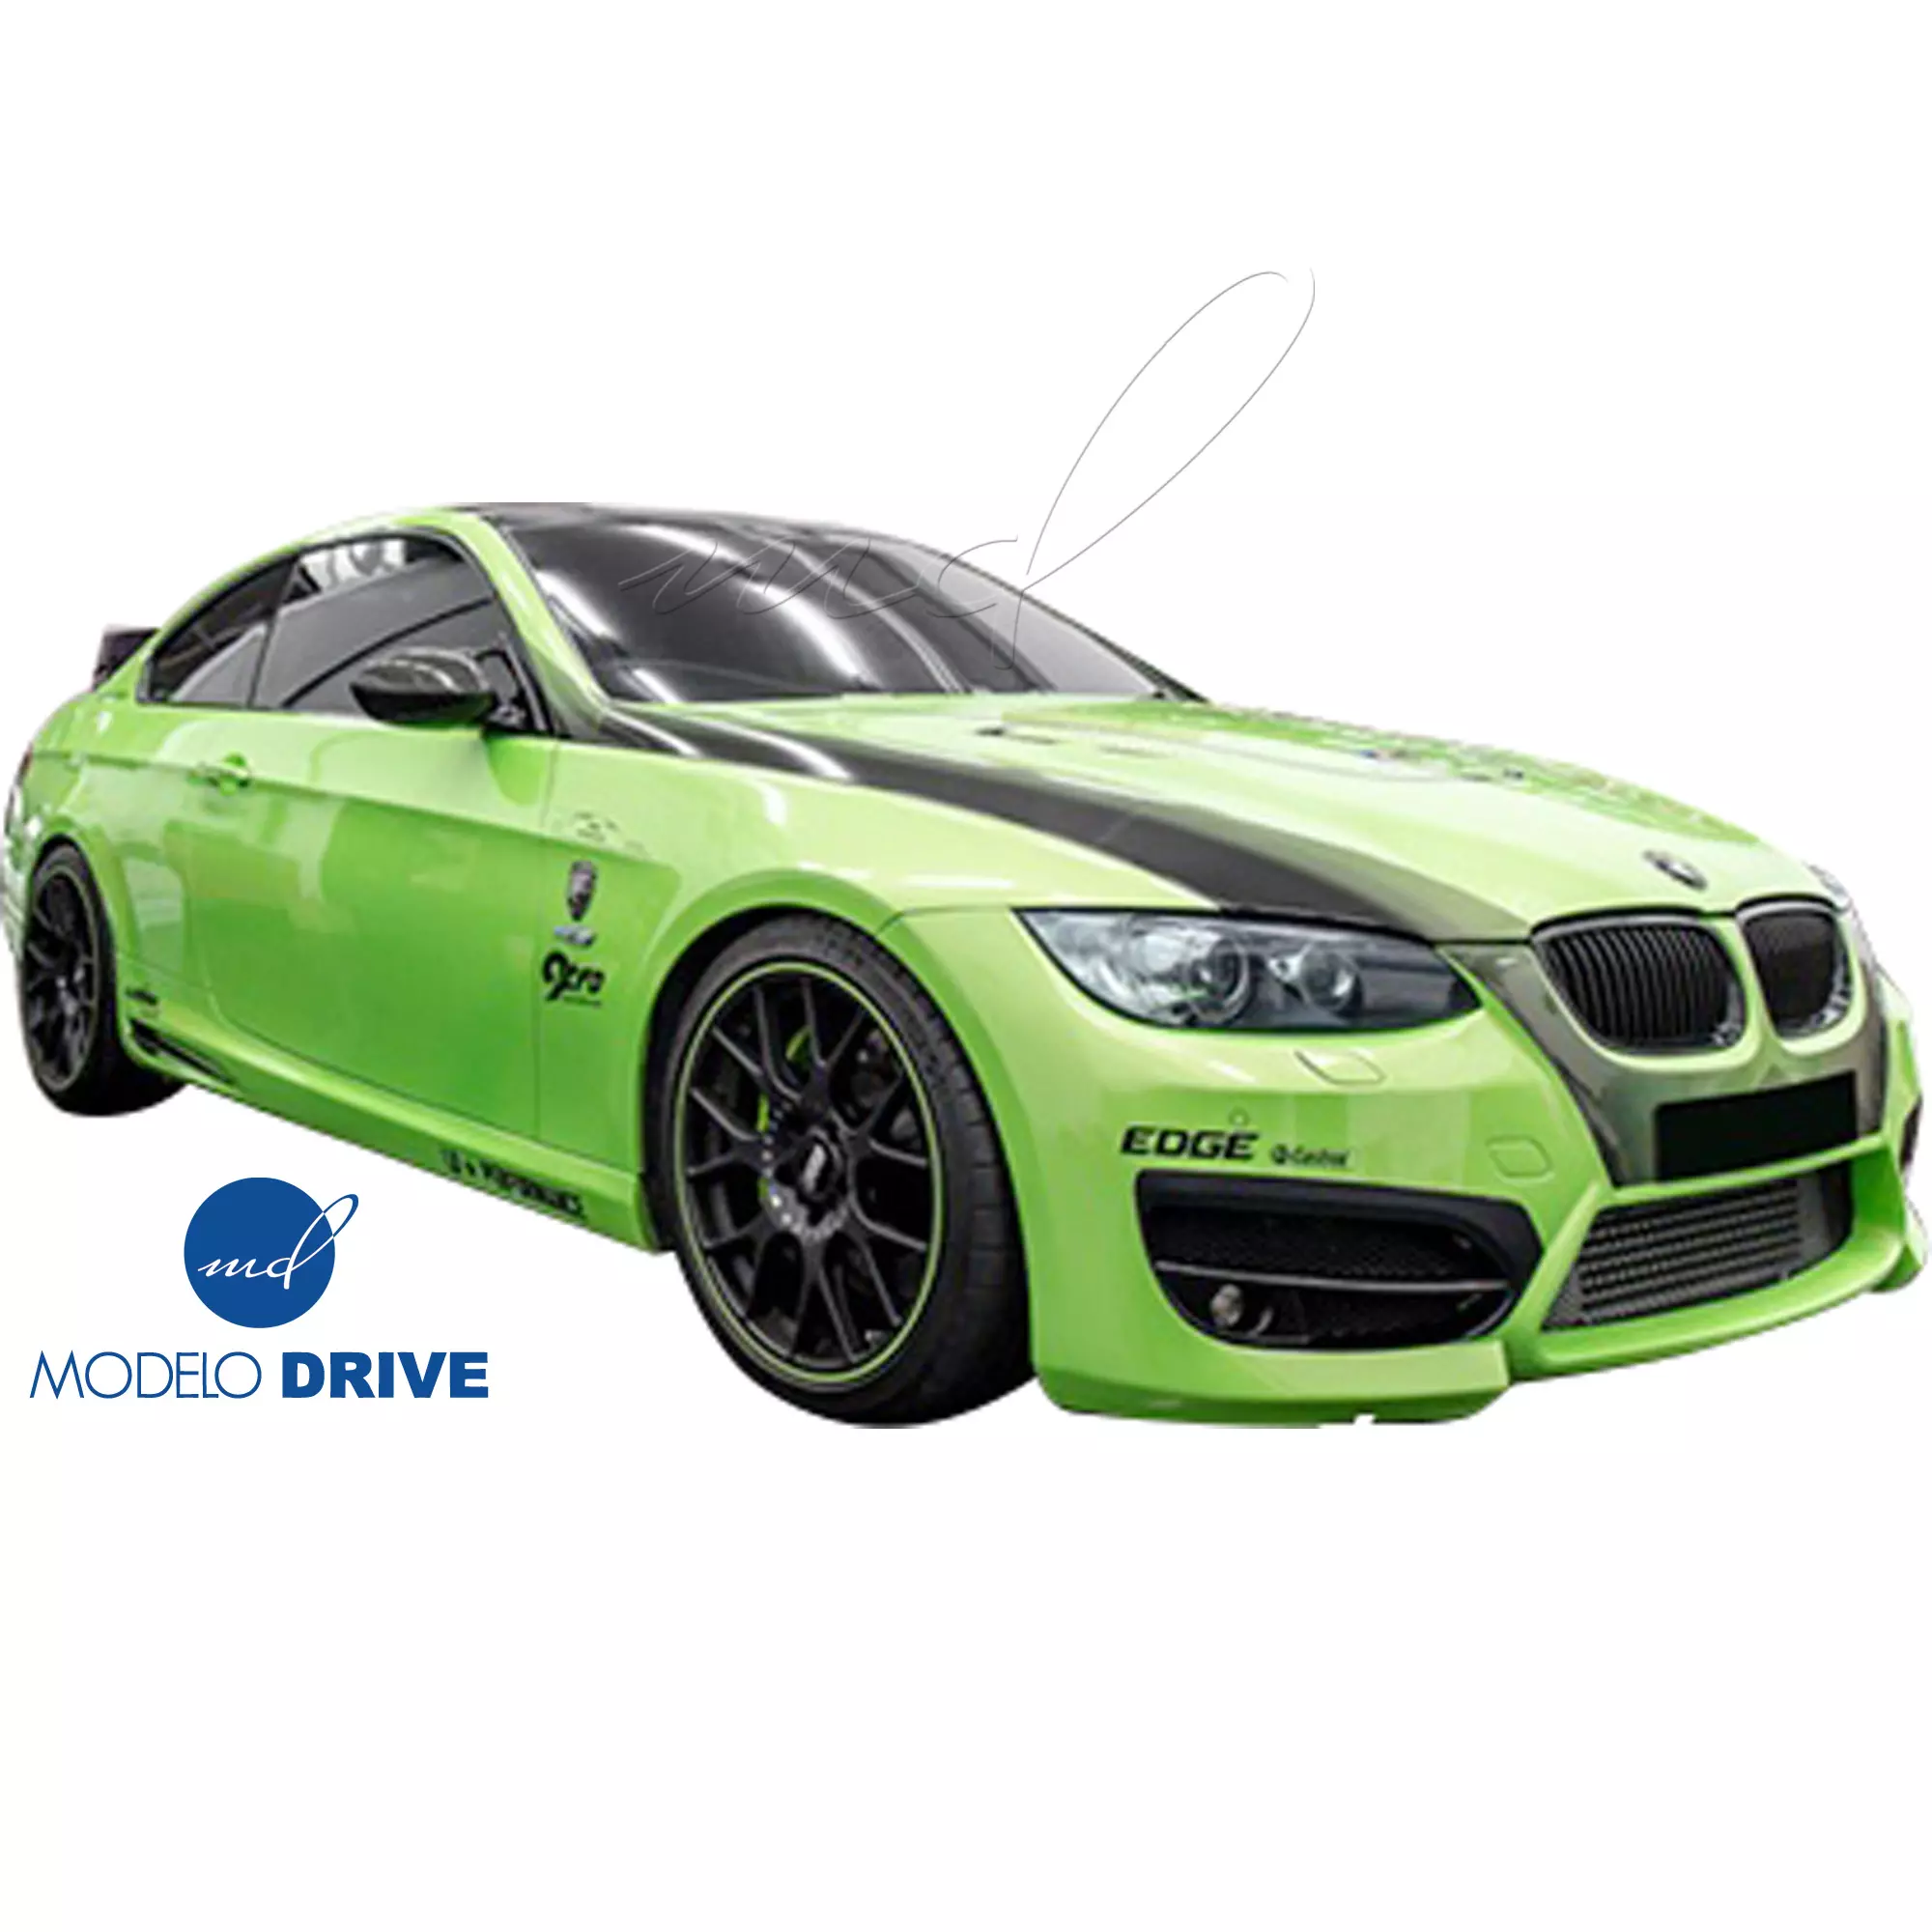 ModeloDrive FRP LUMM 350RS Body Kit 4pc > BMW 3-Series E92 2007-2010 > 2dr - Image 10